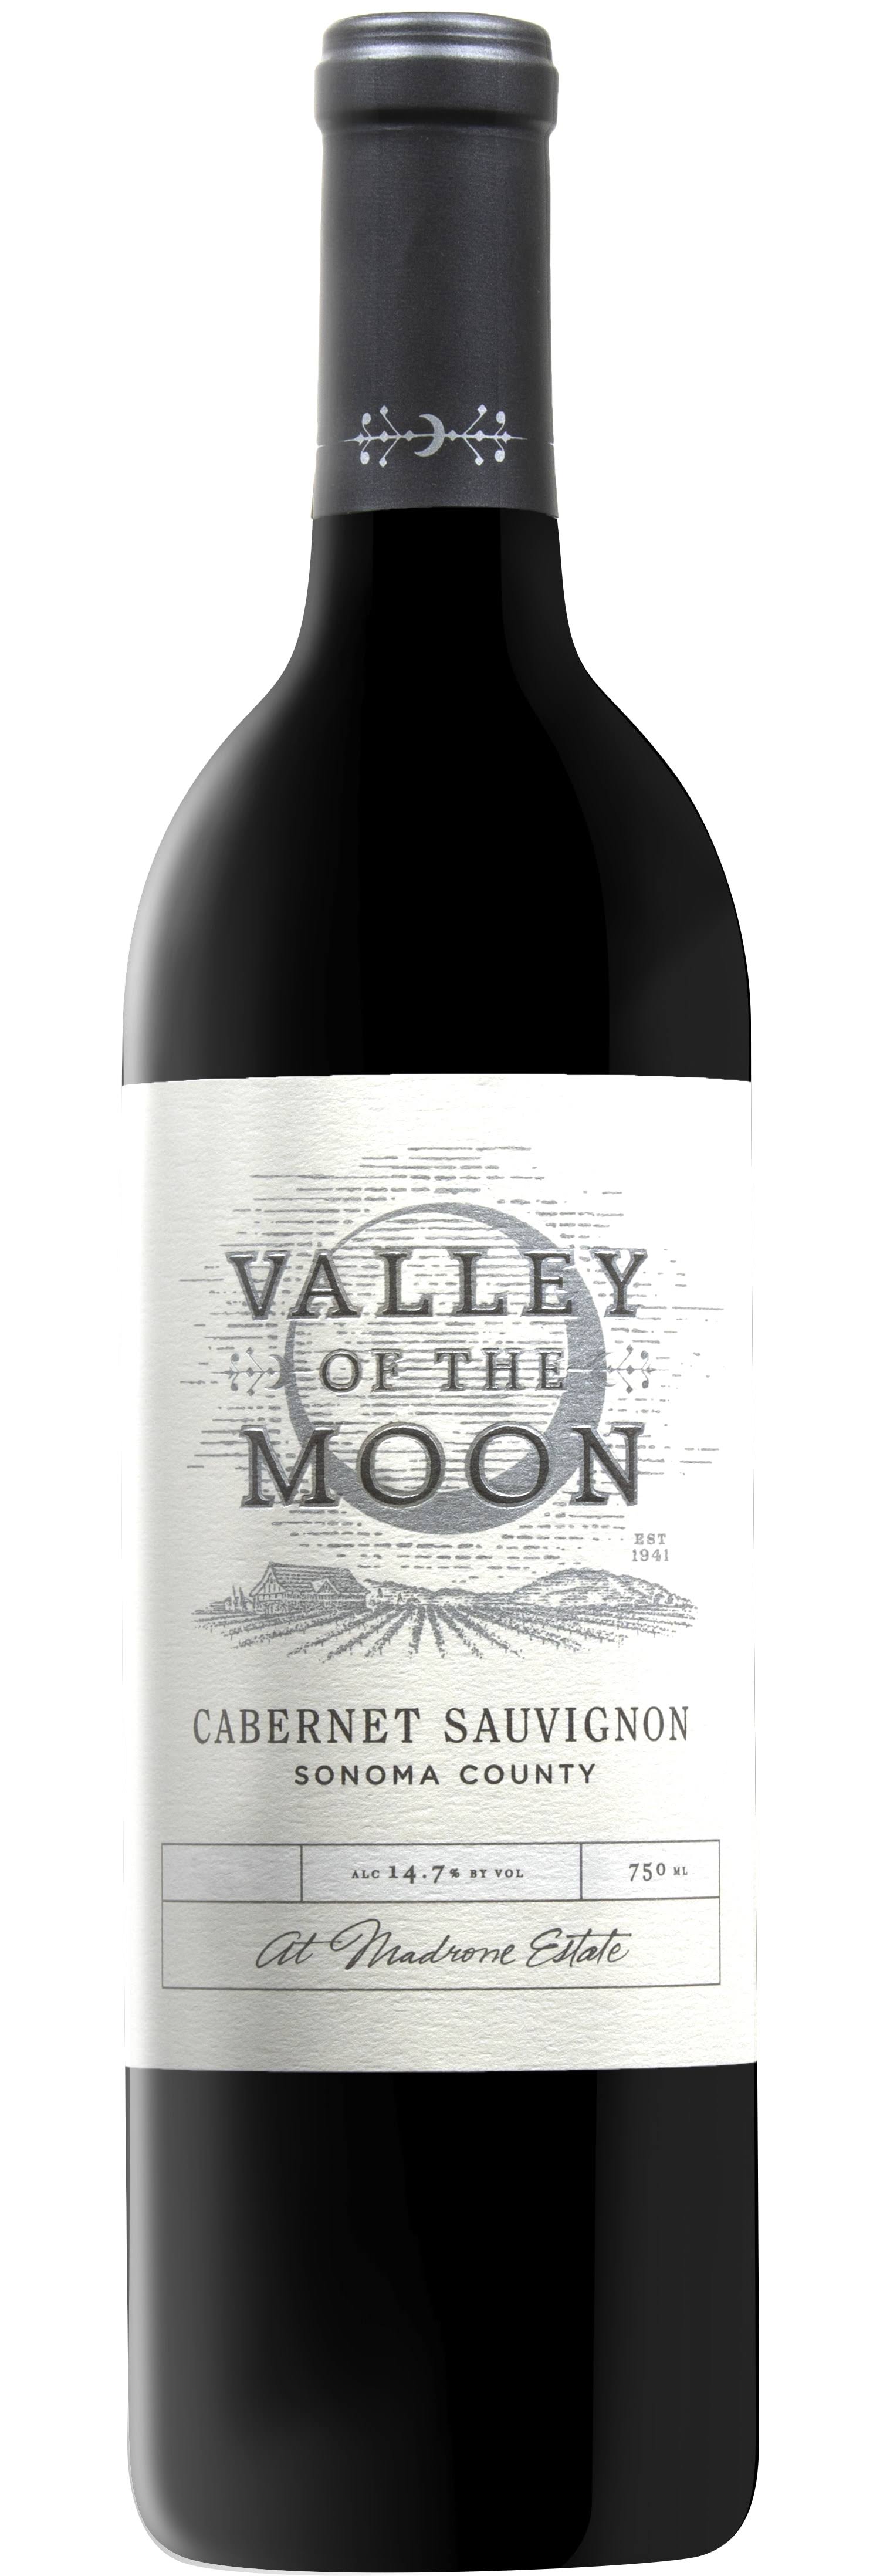 Valley of the Moon Cabernet Sauvignon, Sonoma County, 2010 - 750 ml